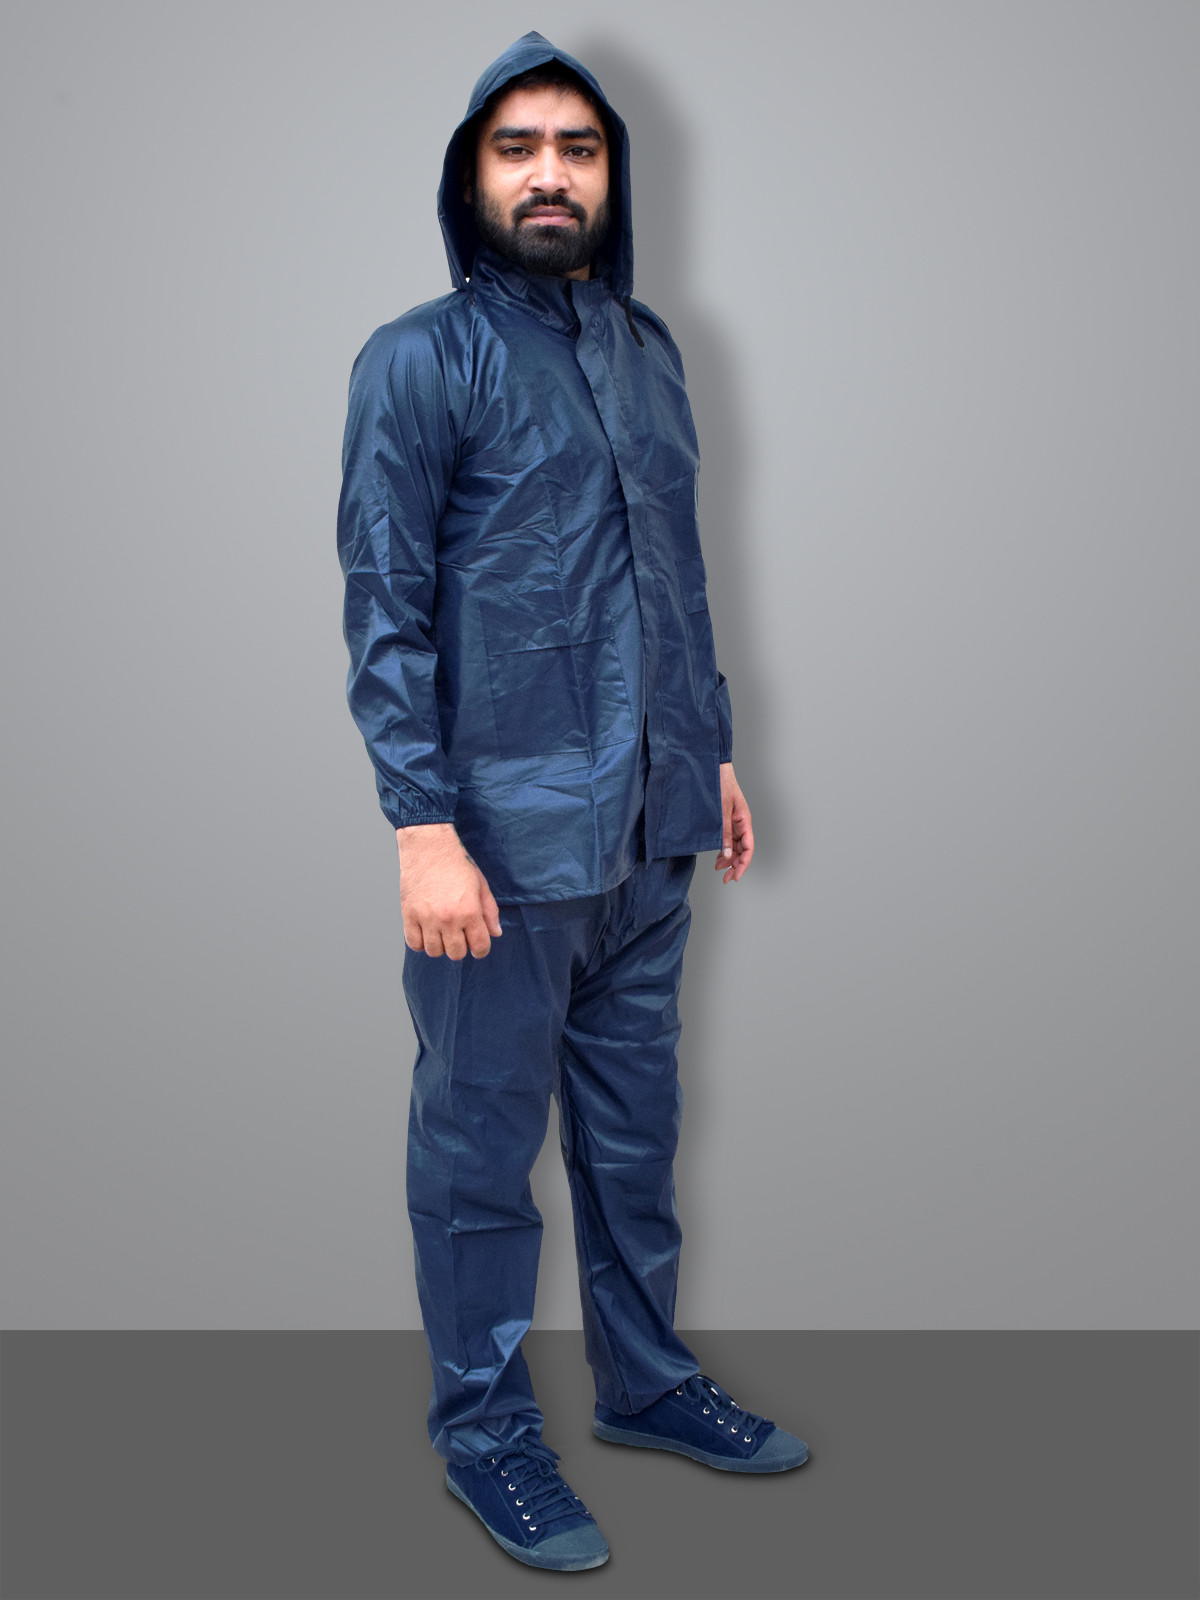 Kuber Industries PVC Raincoat With Adjustable Hood For Men & Women (Navy Blue) XL